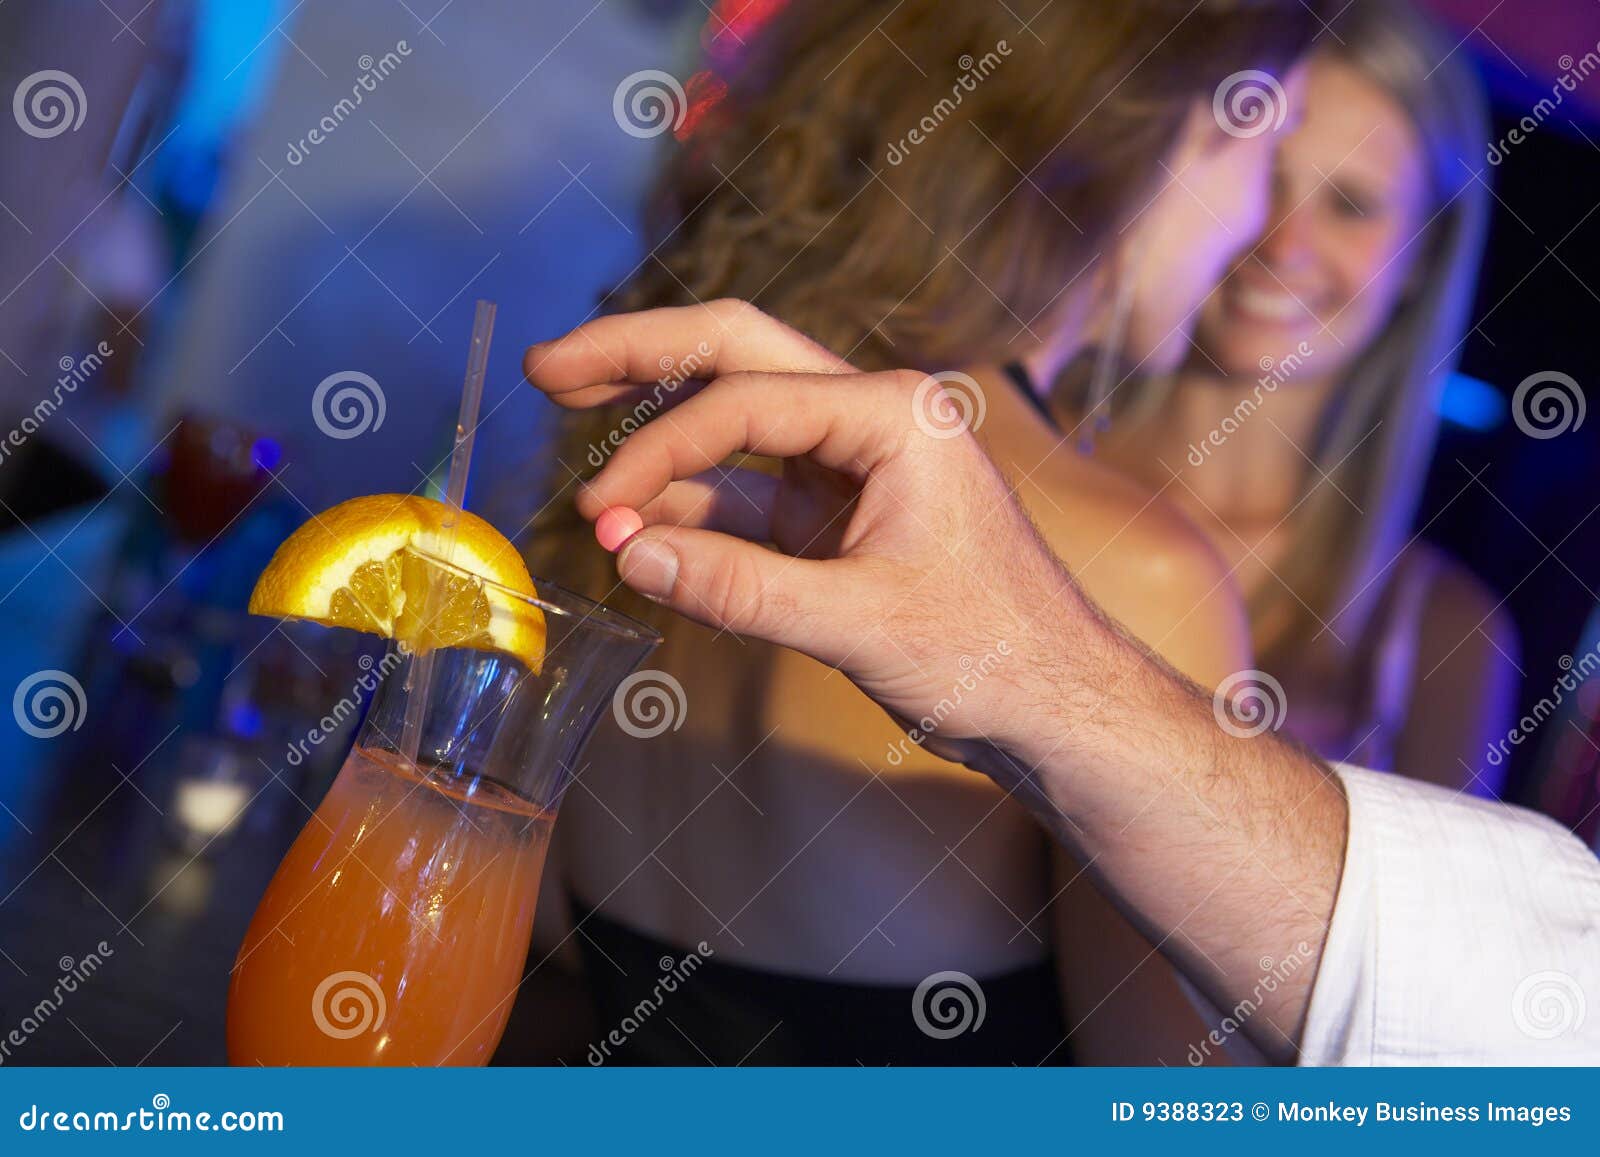 man drugging woman's drink in bar